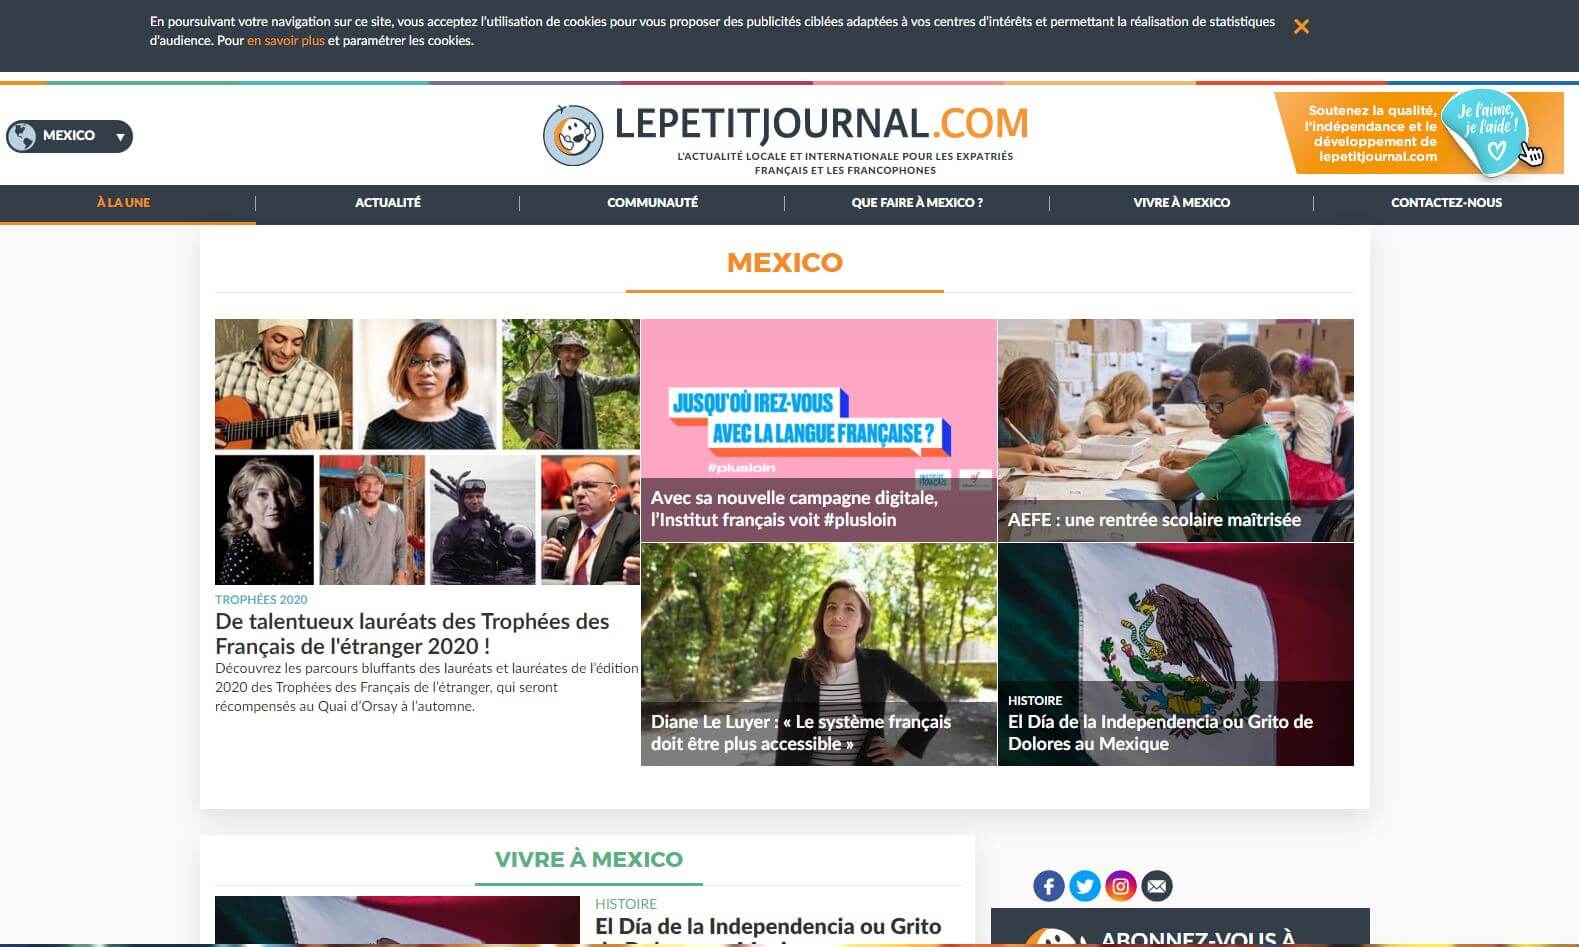 periodicos de ciudad de mexico 19 le petit journal com website